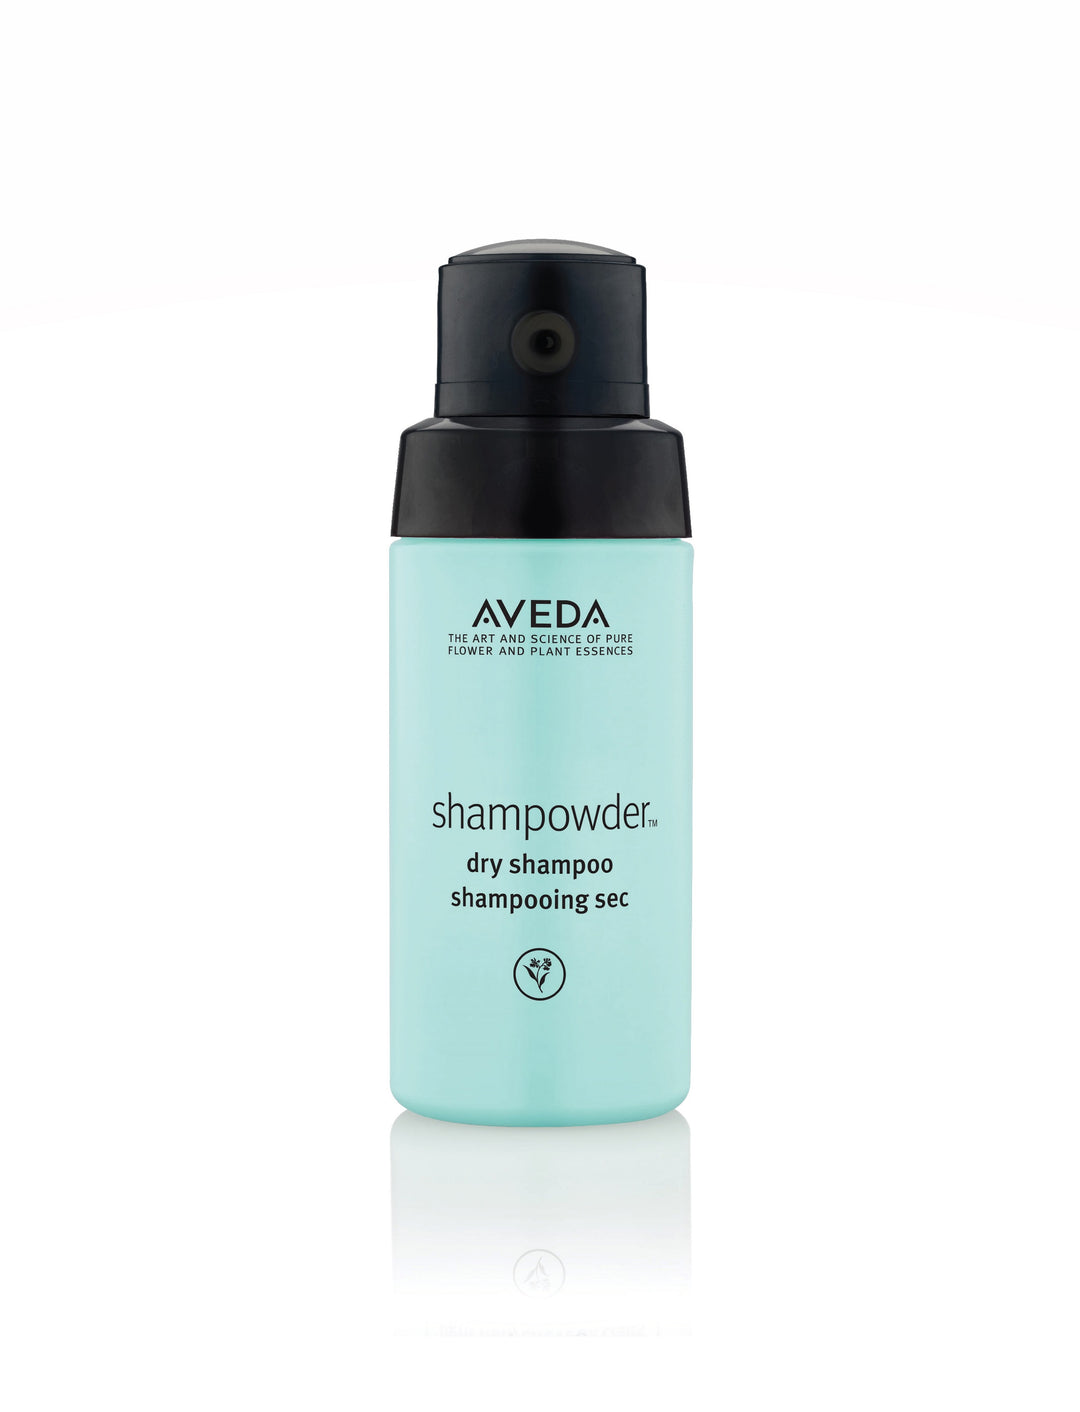 Shampowder Dry Shampoo